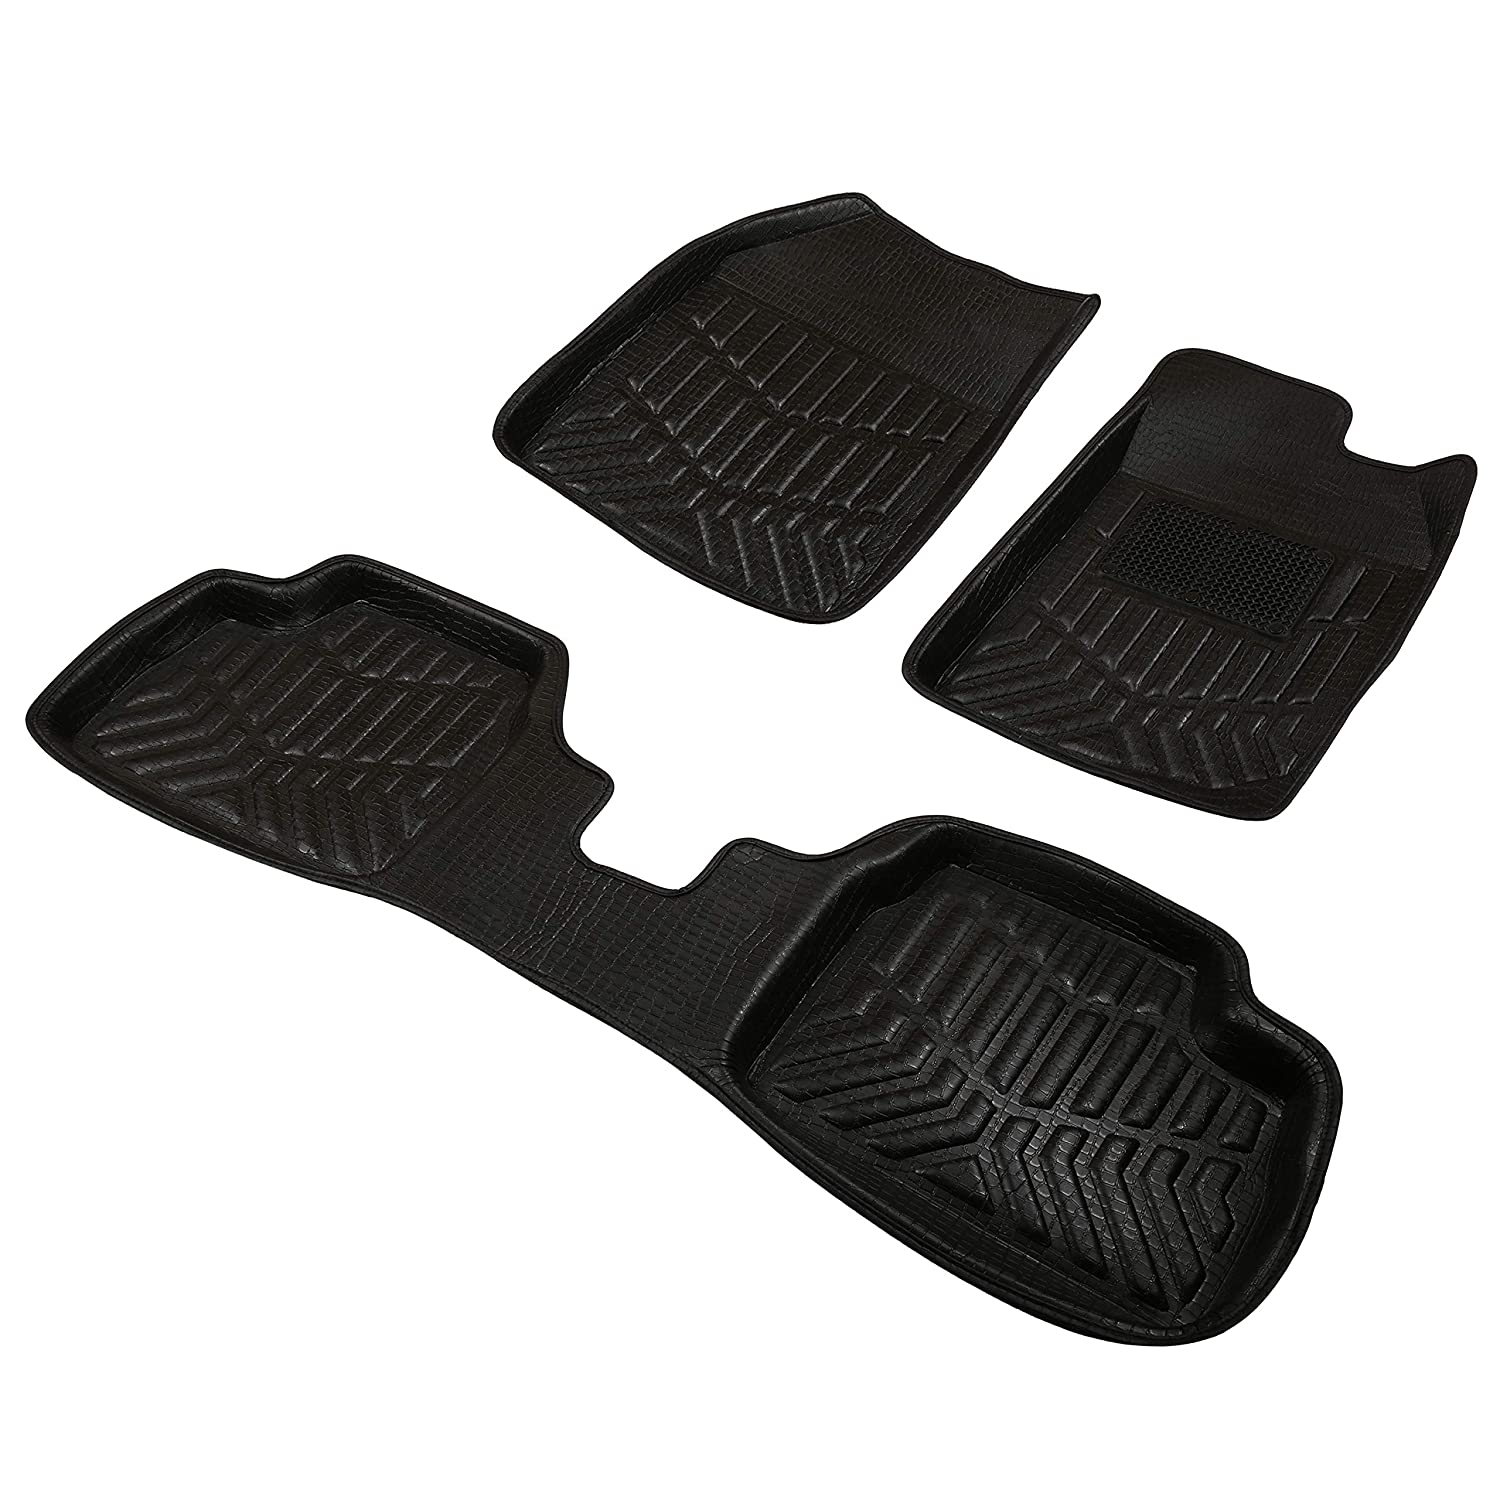 Drivn 3D Customised Car Floor Mat for Tata Tiago - Black (Set of 3)